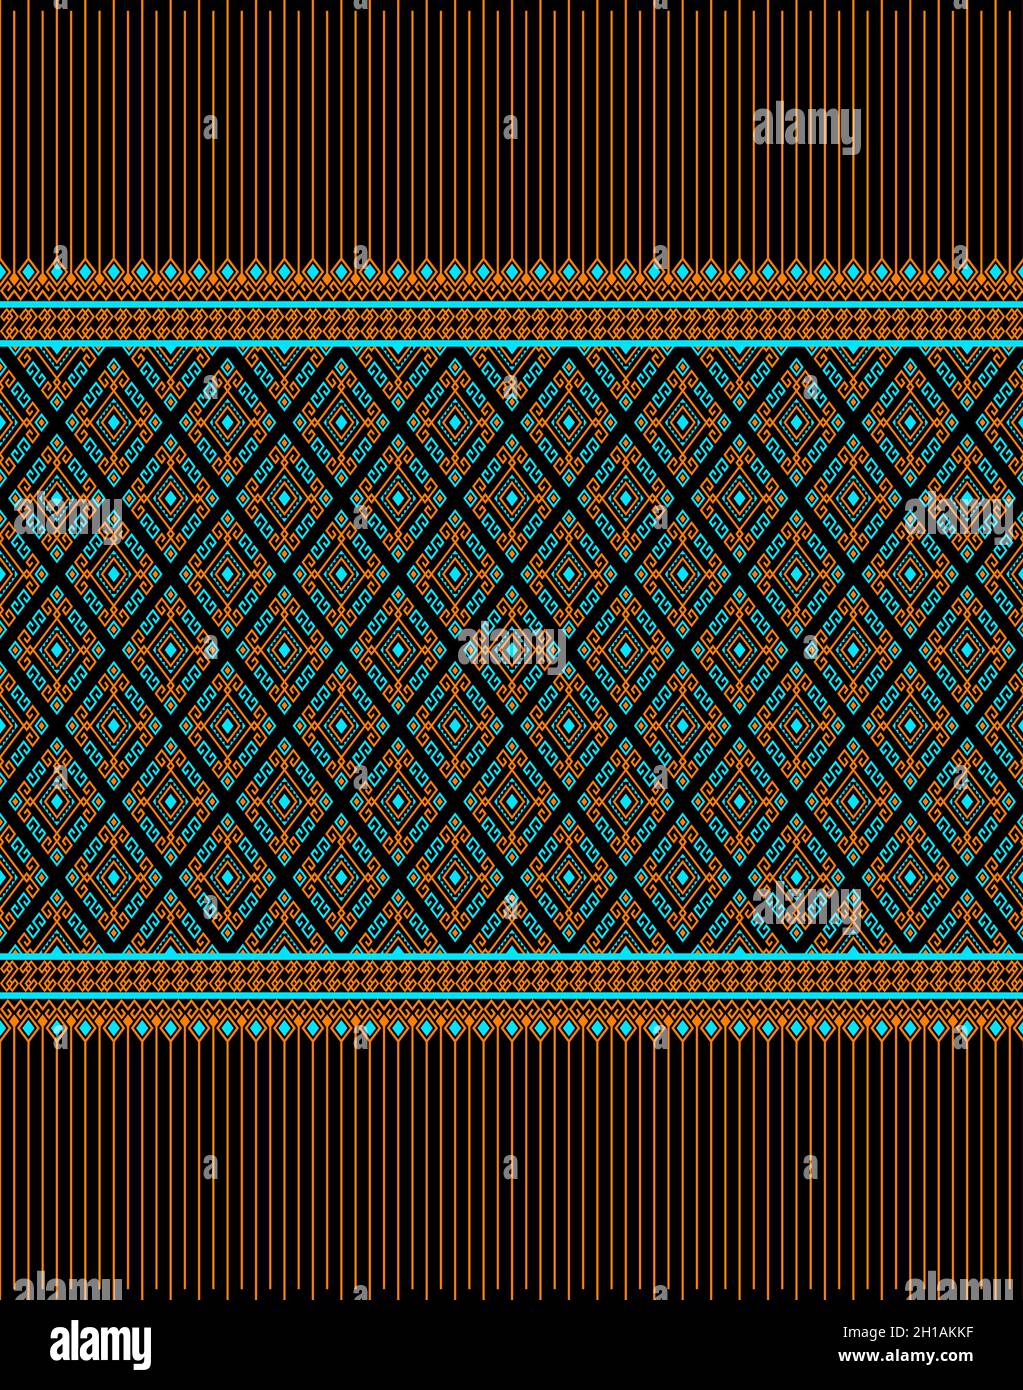 Magenta Turquoise Ethnic or Tribal Seamless Pattern on Black